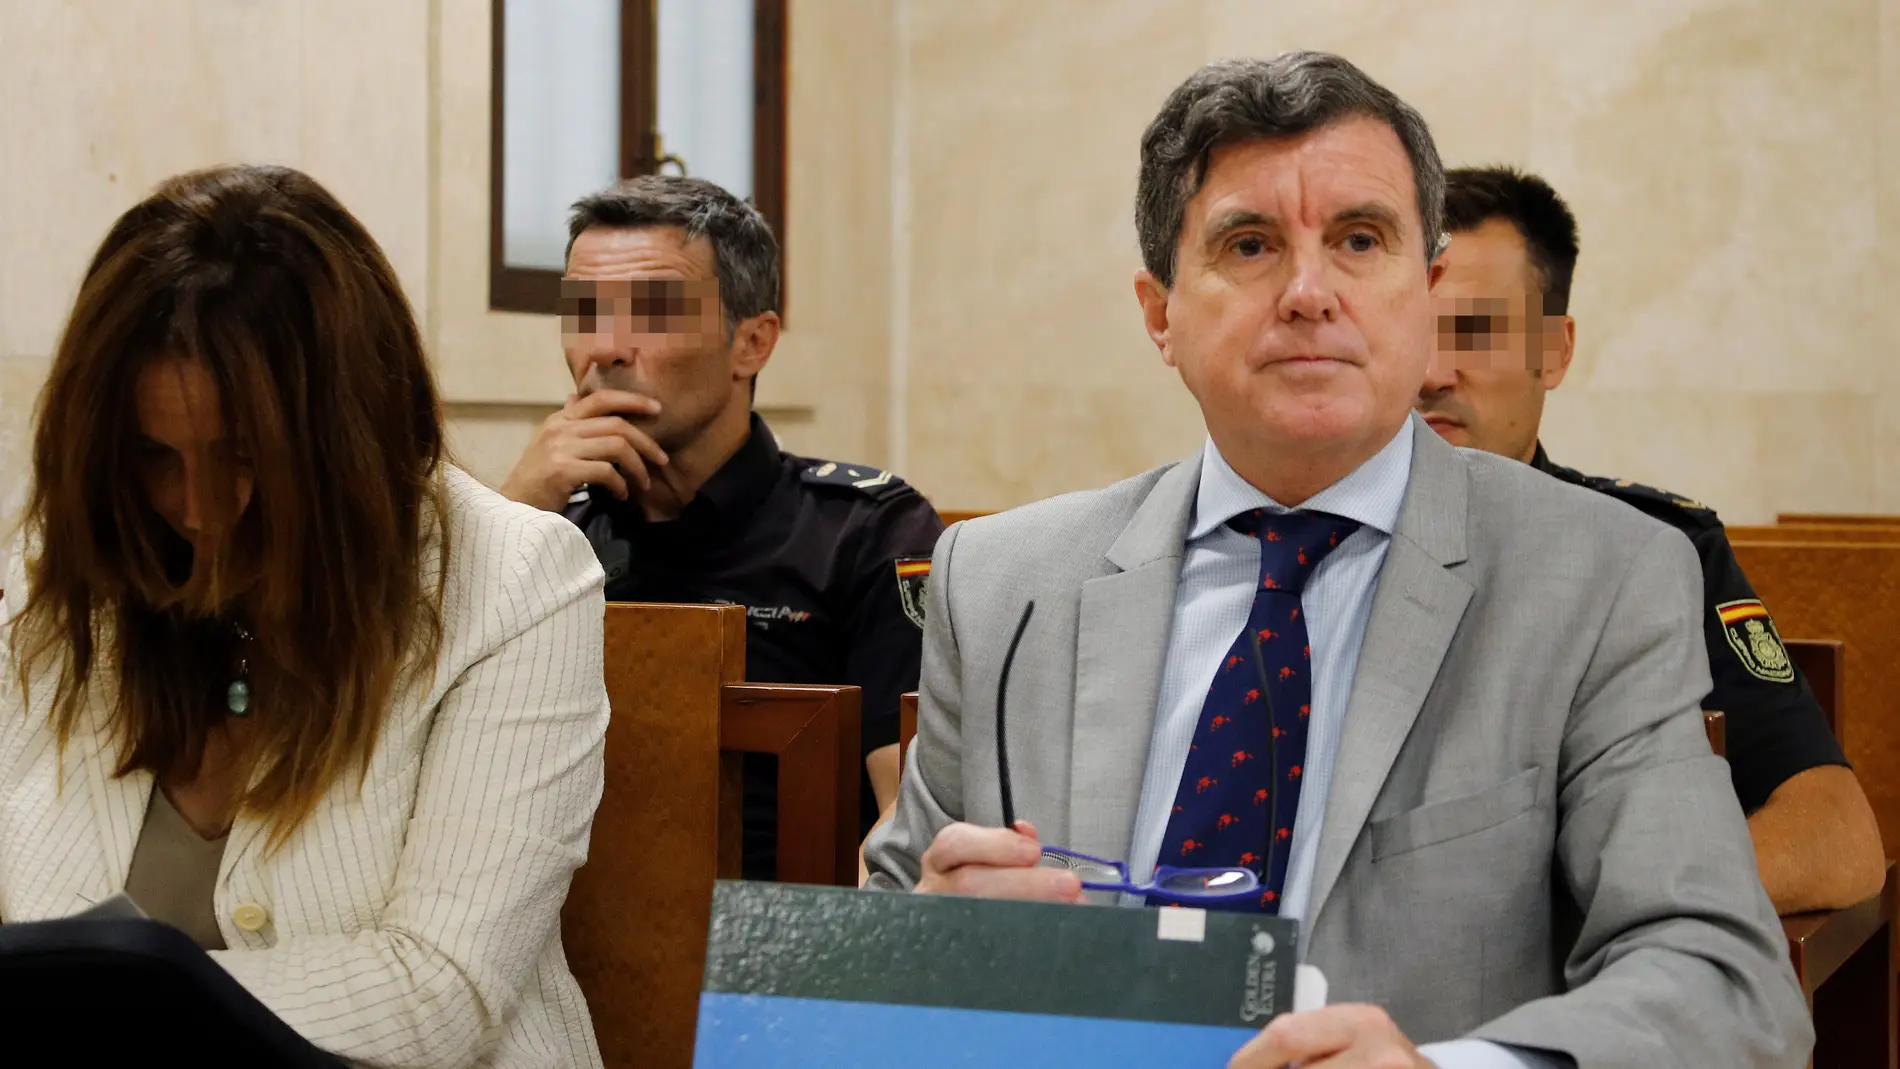 El expresidente del Govern balear Jaume Matas 